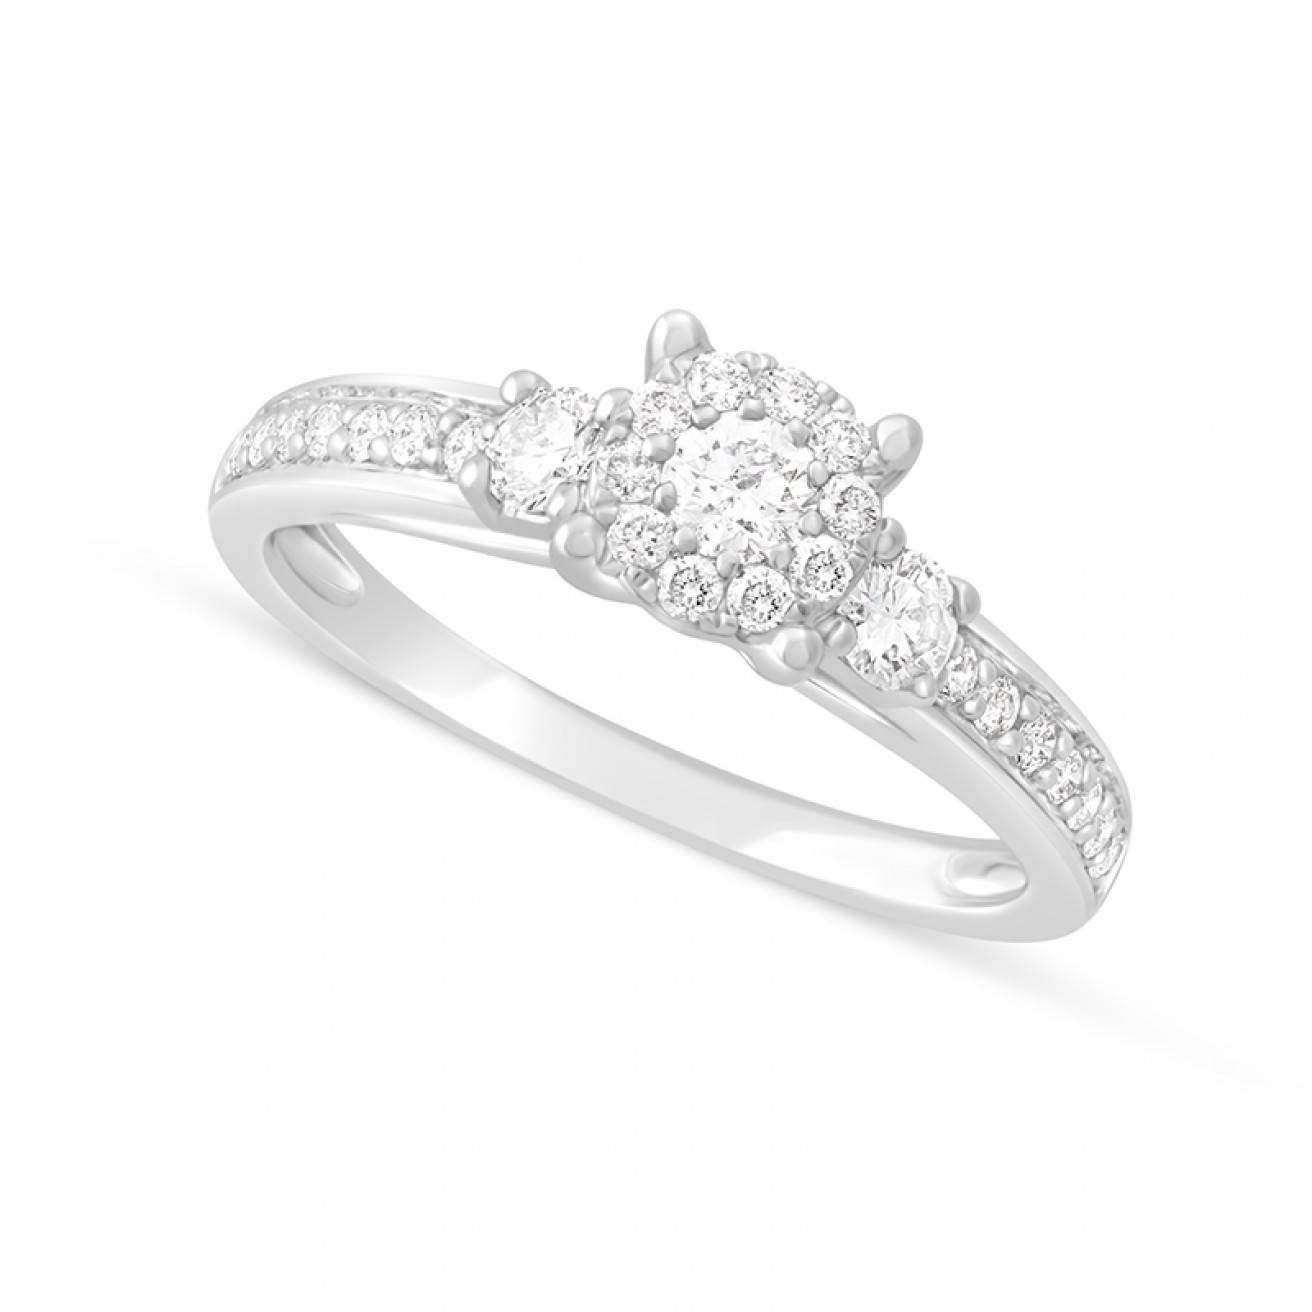 Buy A White Gold Engagement Ring – Fraser Hart With White Gold Engagement And Wedding Rings (View 4 of 15)